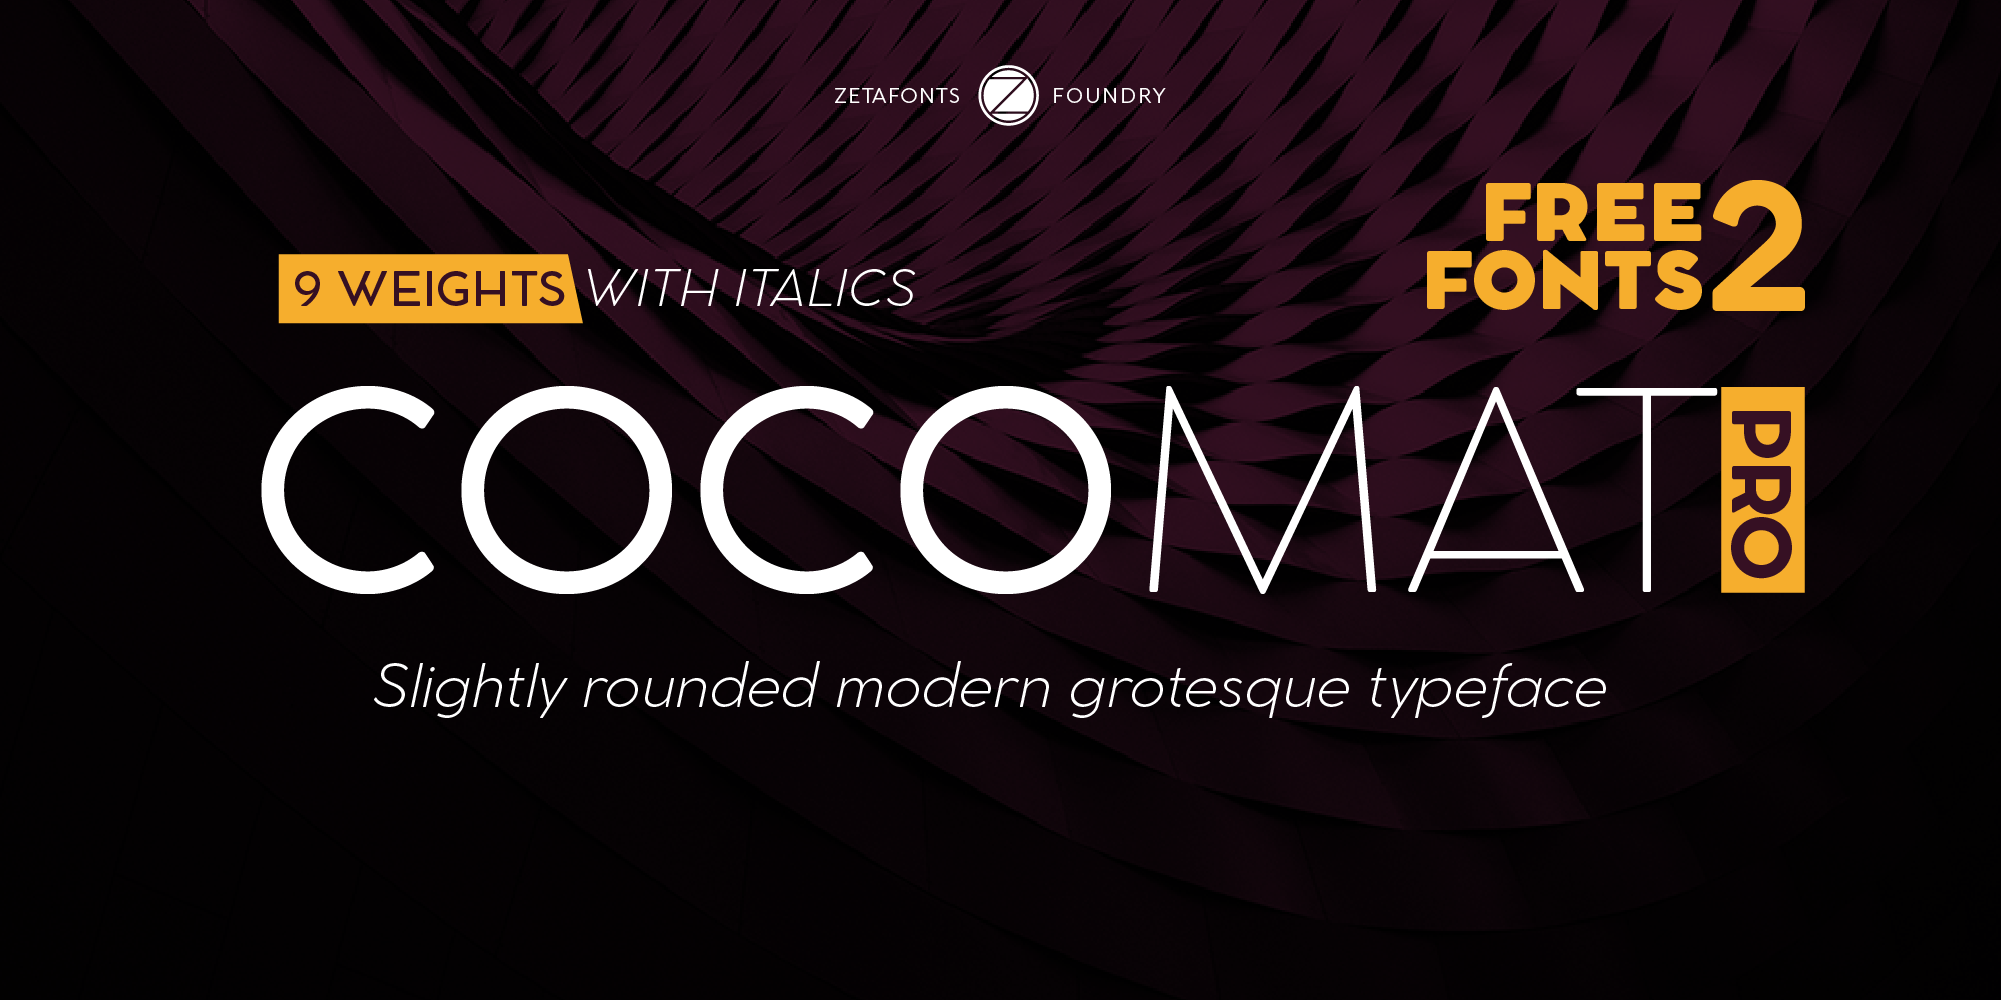 Cocomat Pro Typeface By Zetafonts